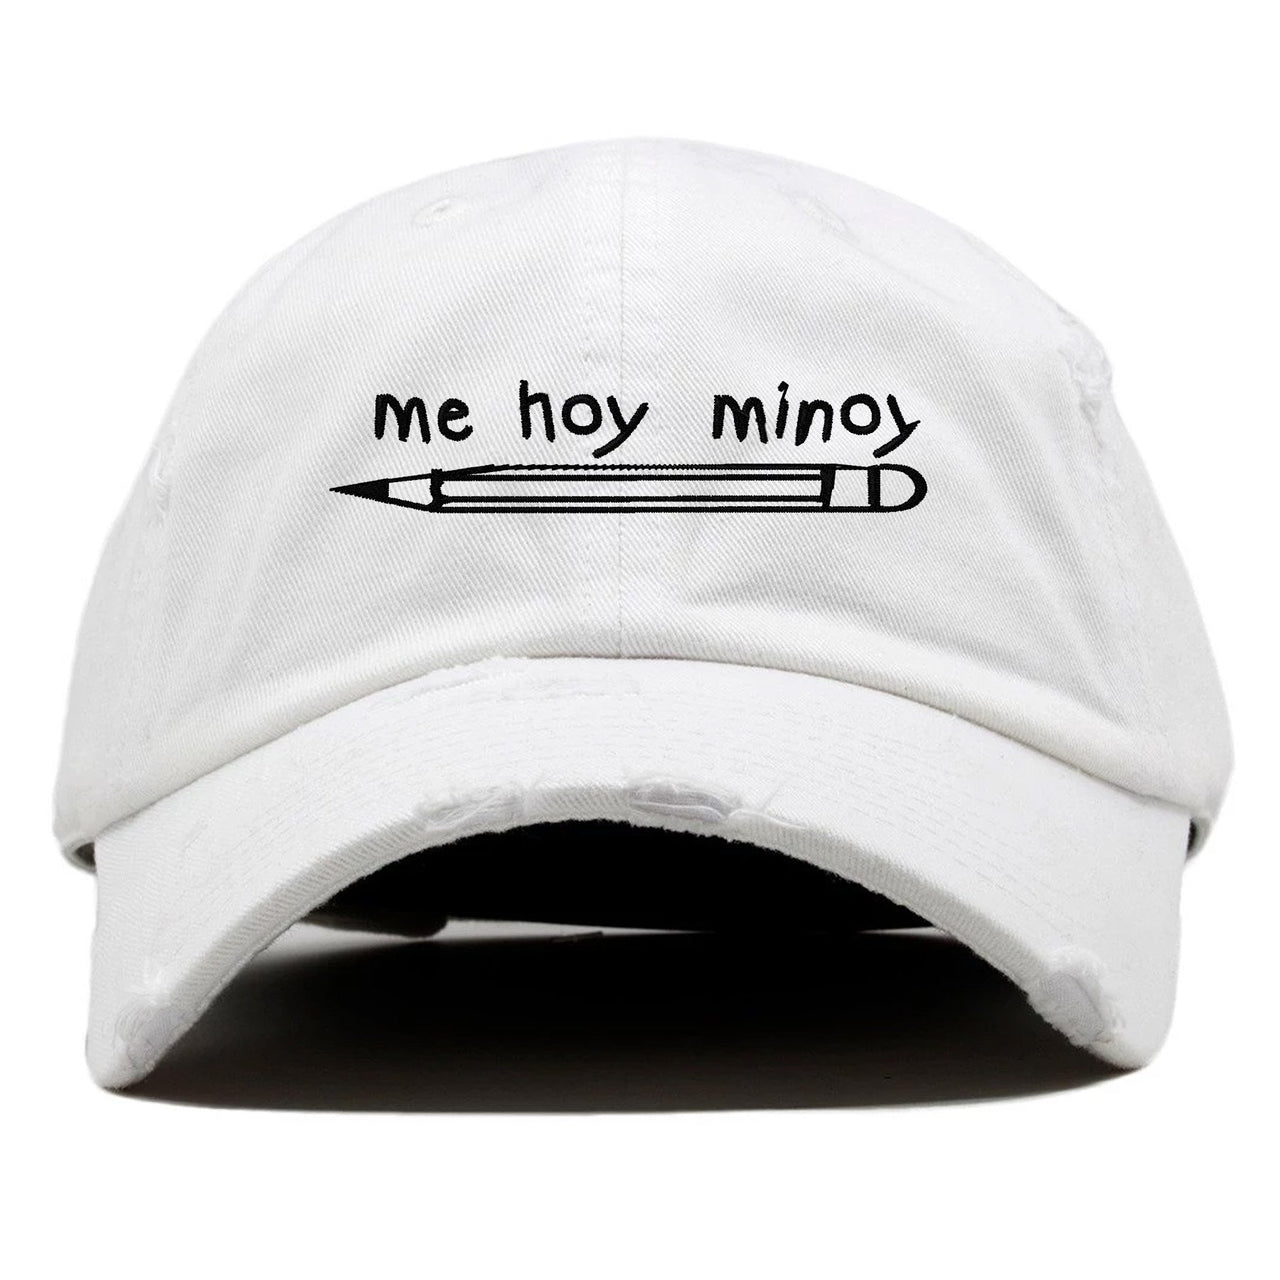 Spongebob K5s Distressed Dad Hat | Mi Hoy Minoy, White